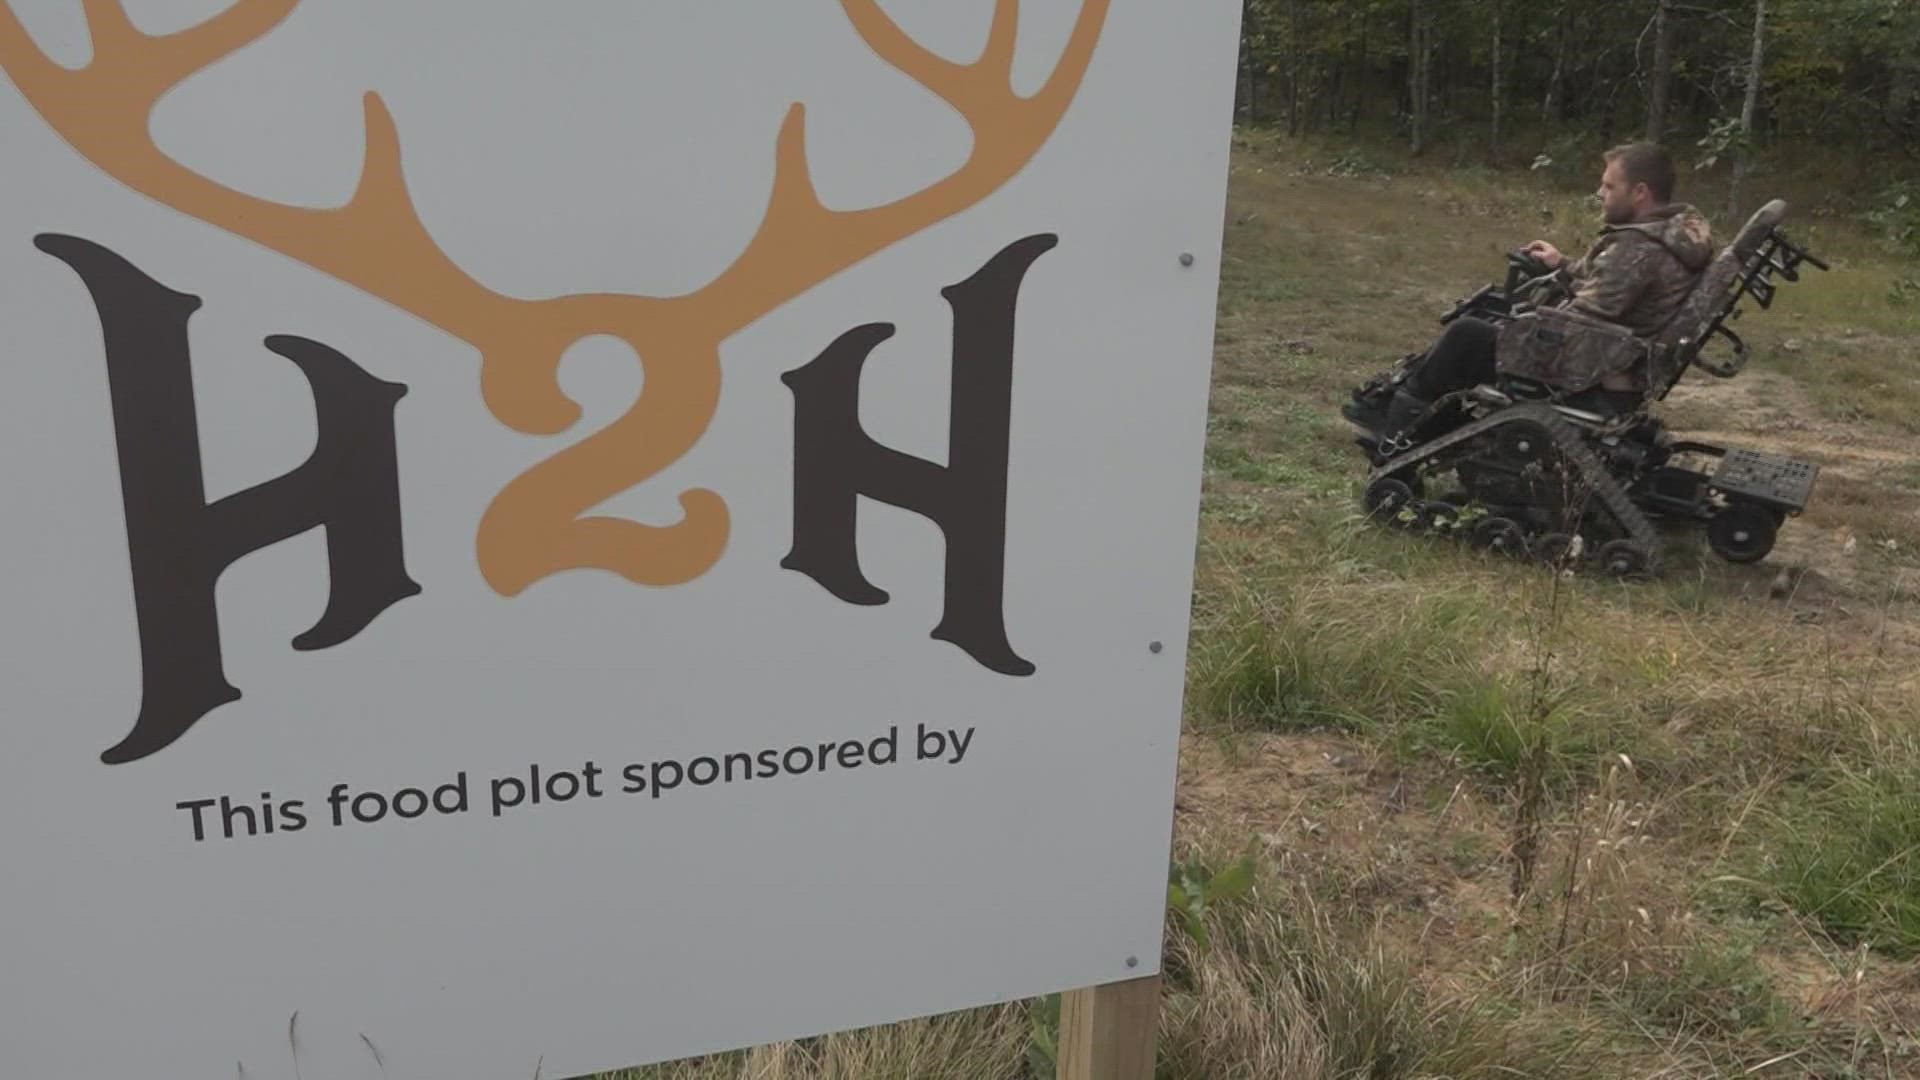 Hunt 2 Heal was started by a motorcycle crash survivor.